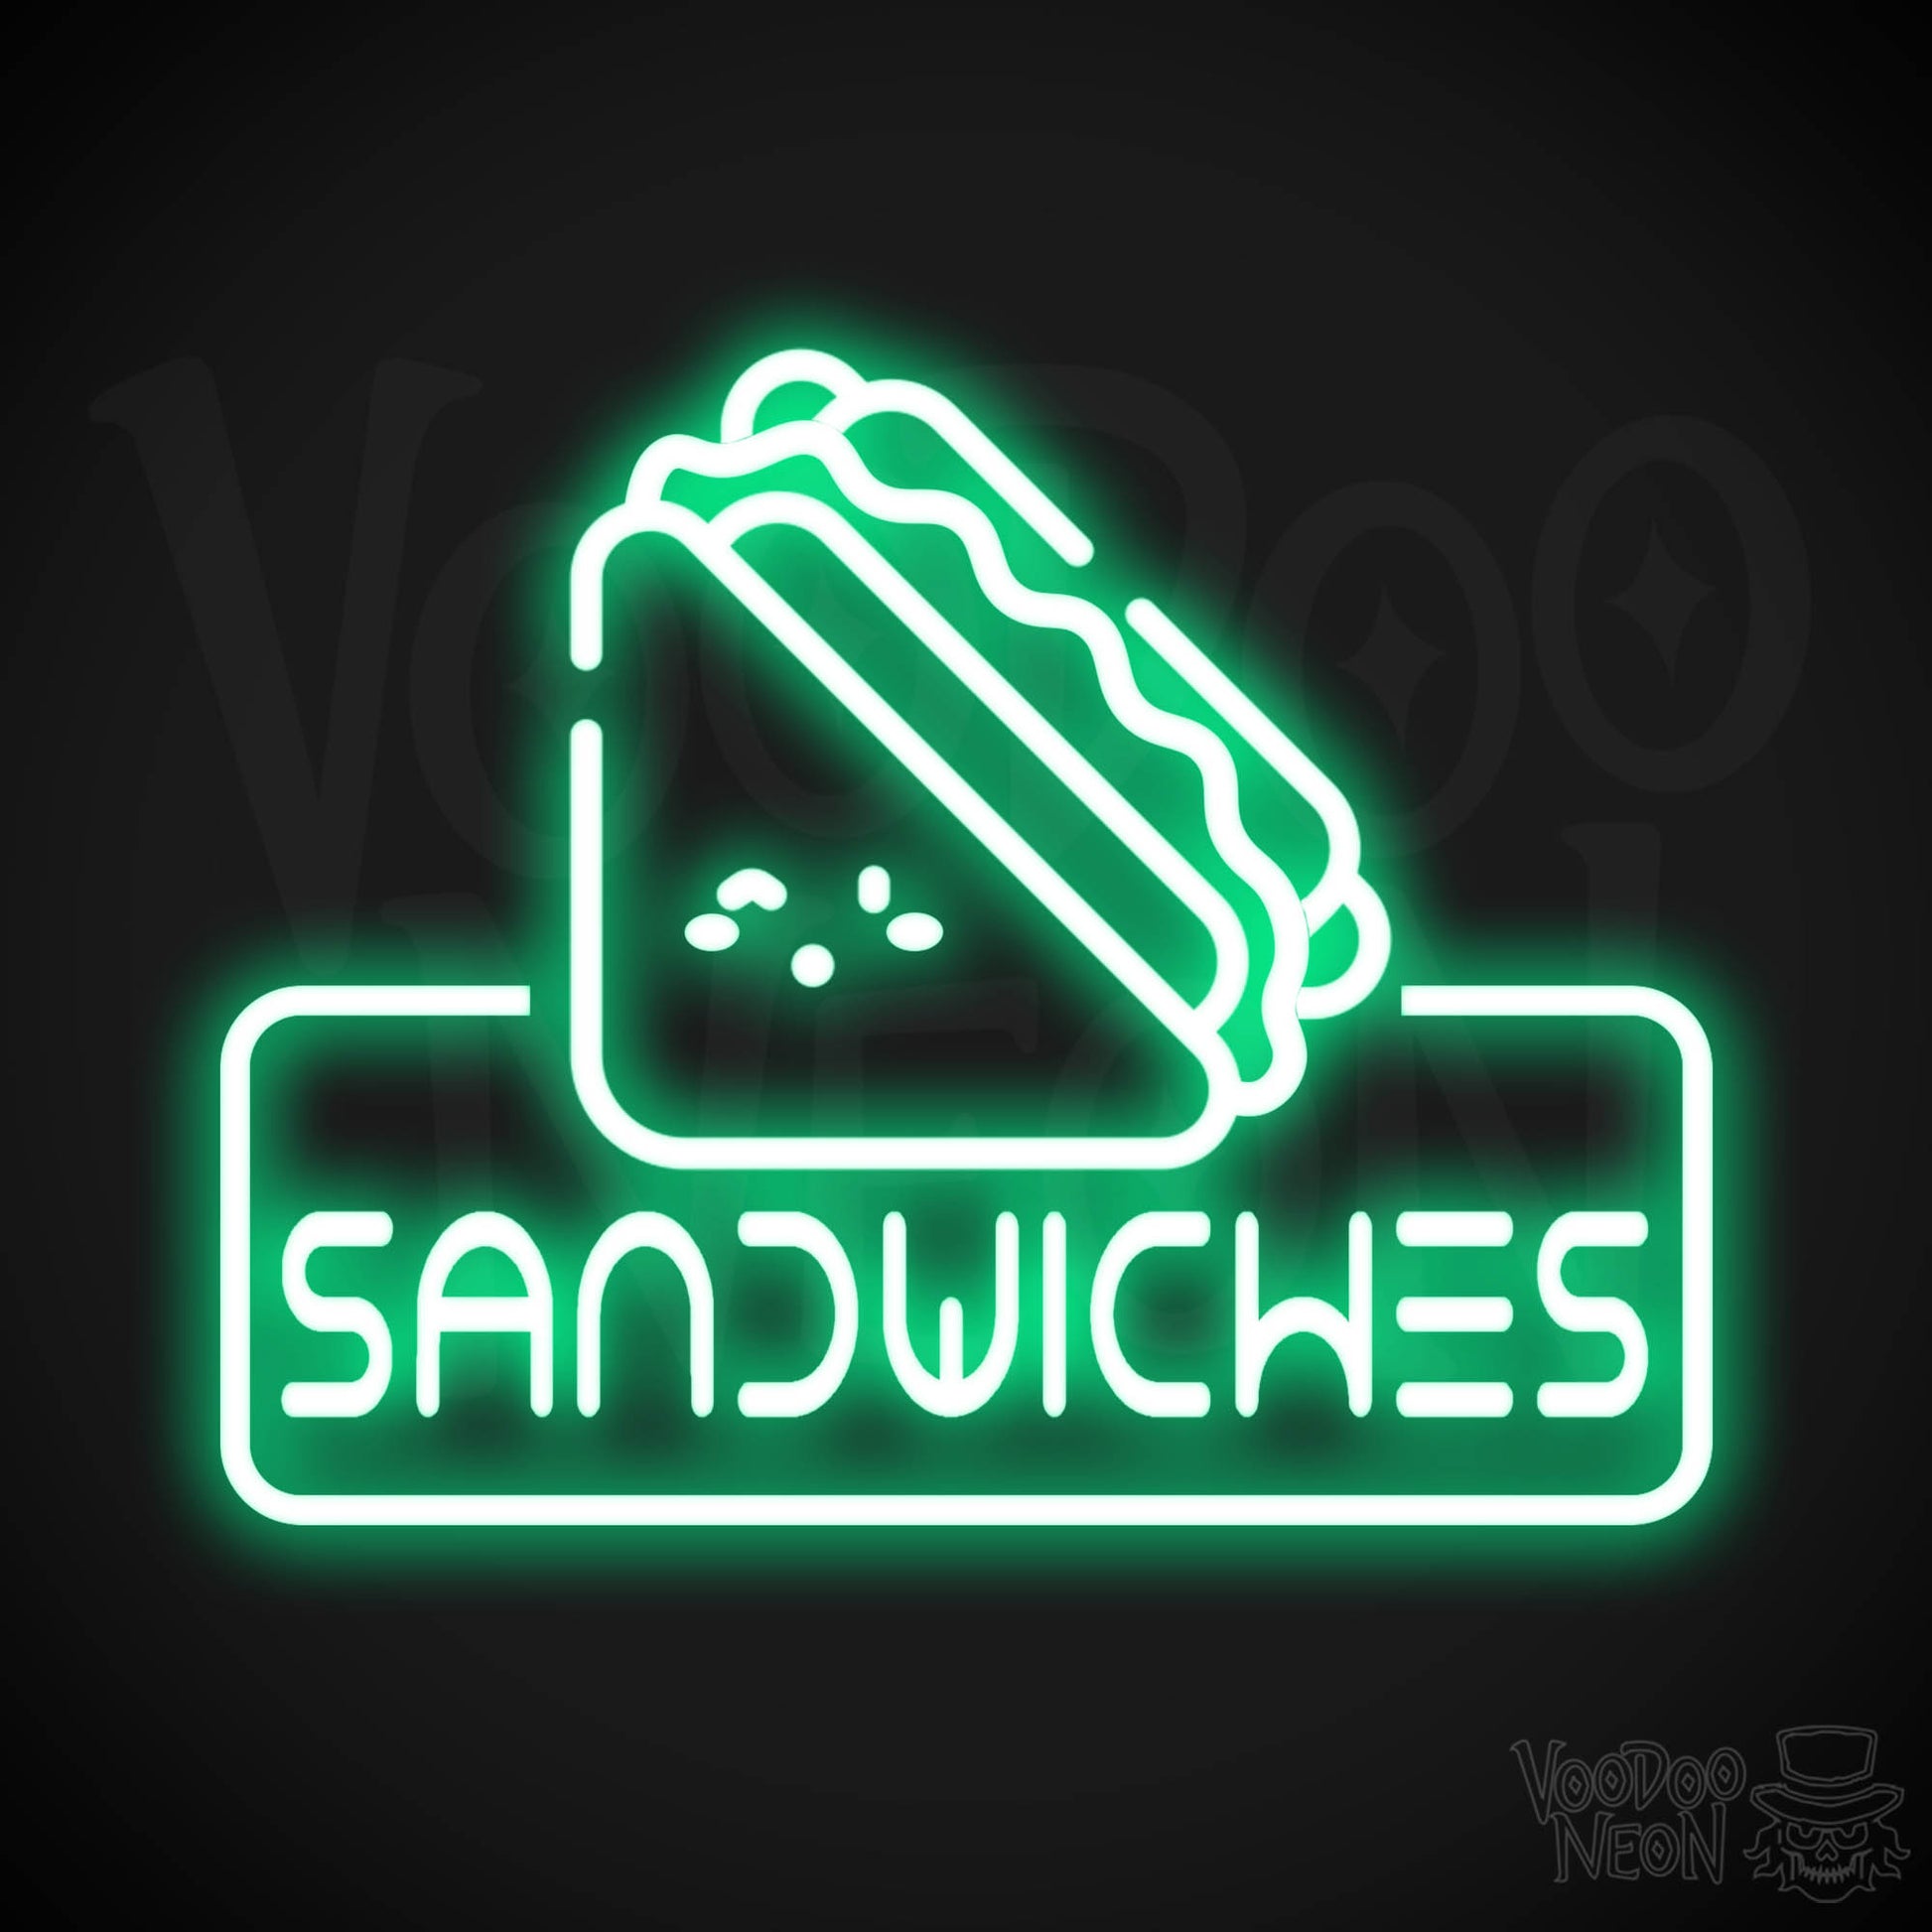 Neon Sandwiches Sign - Sandwich Neon Sign - Neon Sandwich Shop Sign - Color Green